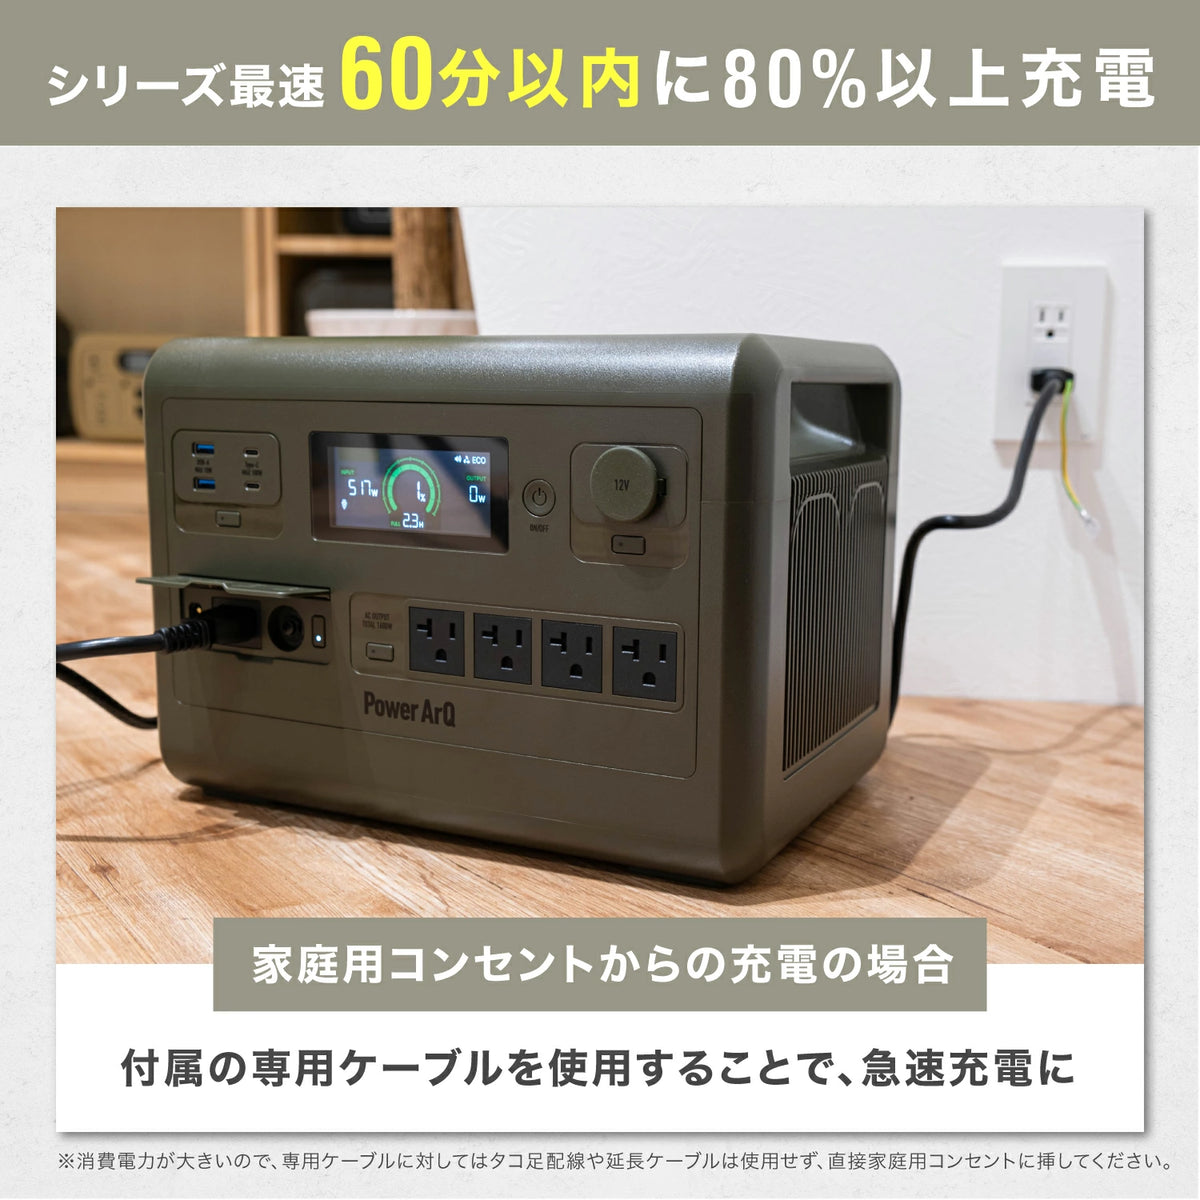 PowerArQ S10 Pro ポータブル電源 1024Wh – PowerArQ（パワーアーク